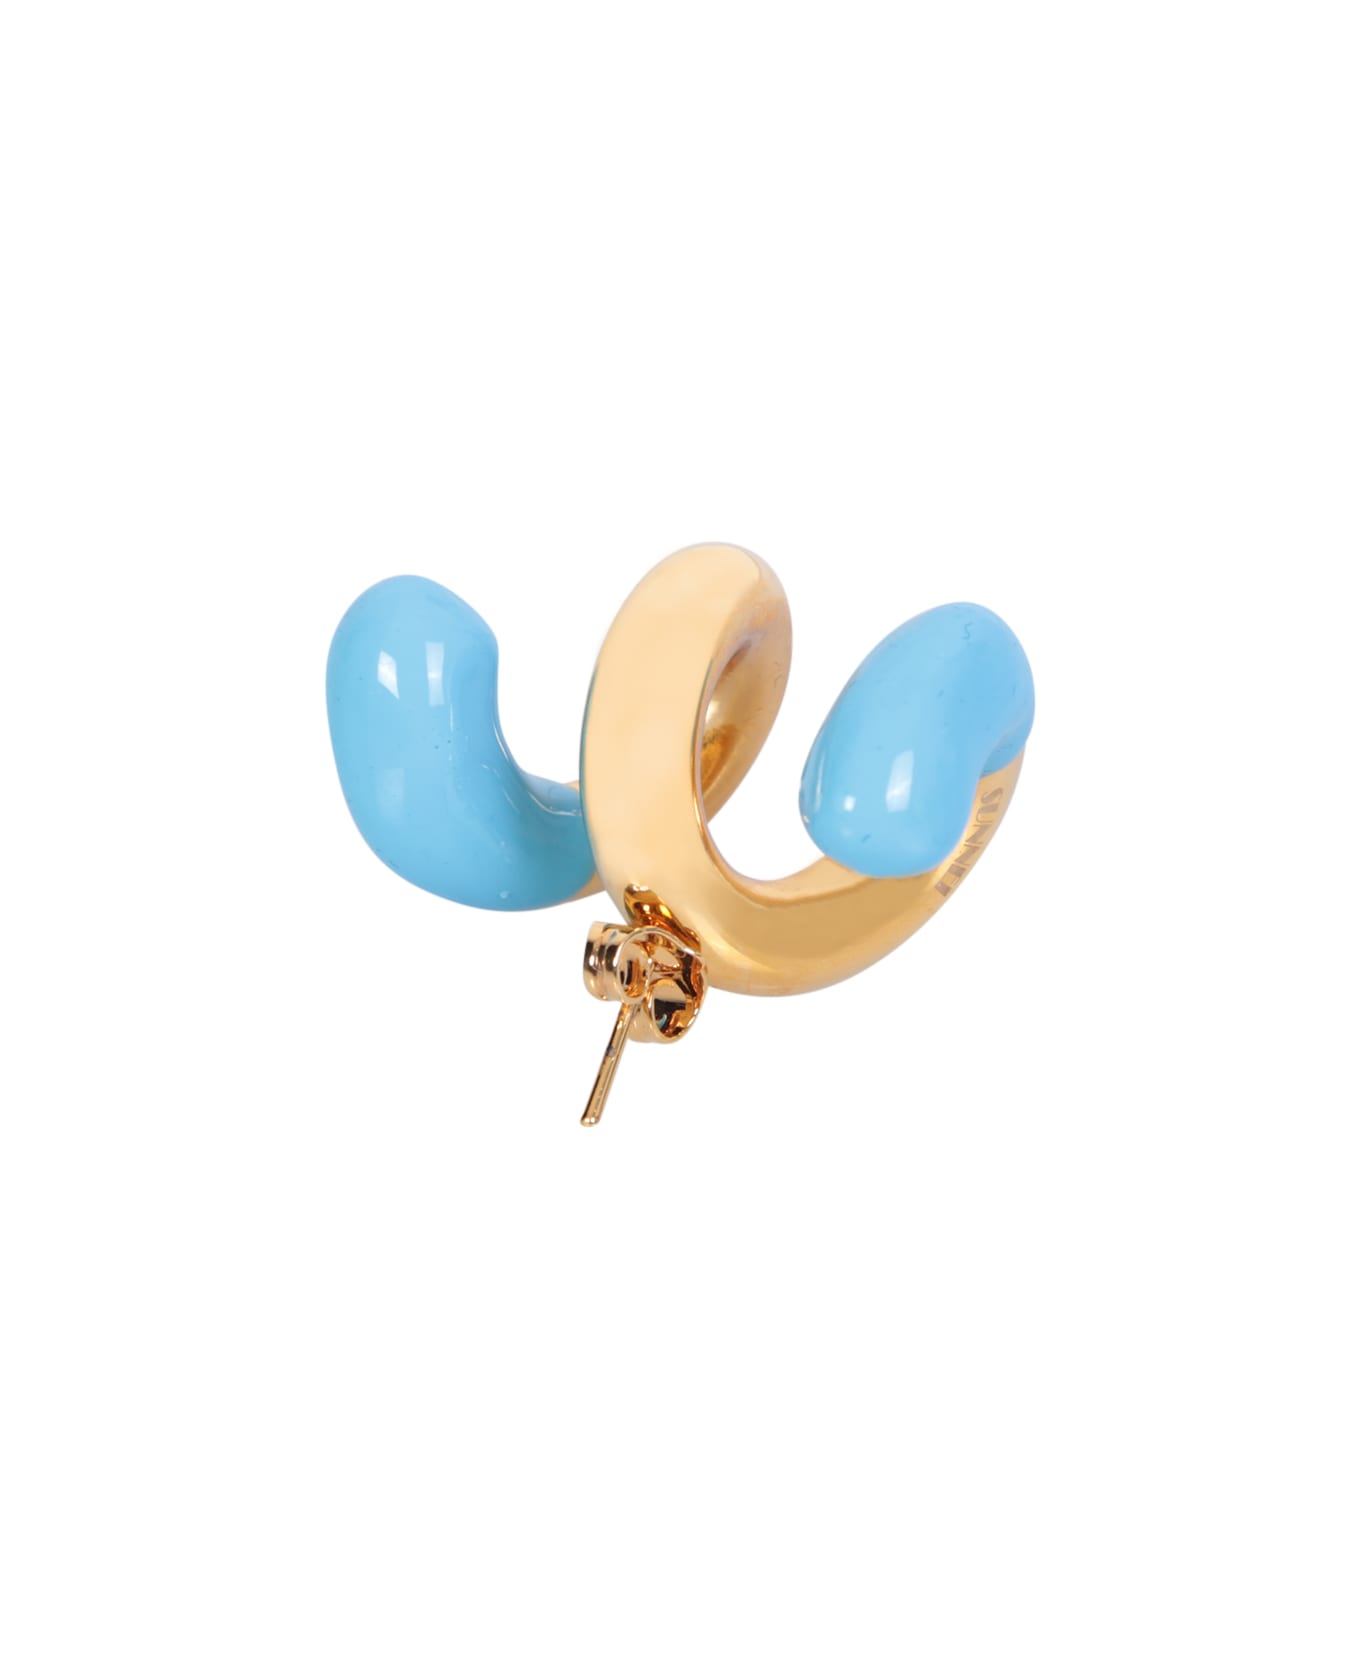 Sunnei Fusillo Rubberized Gold/ Light Blue Earrings - Blue